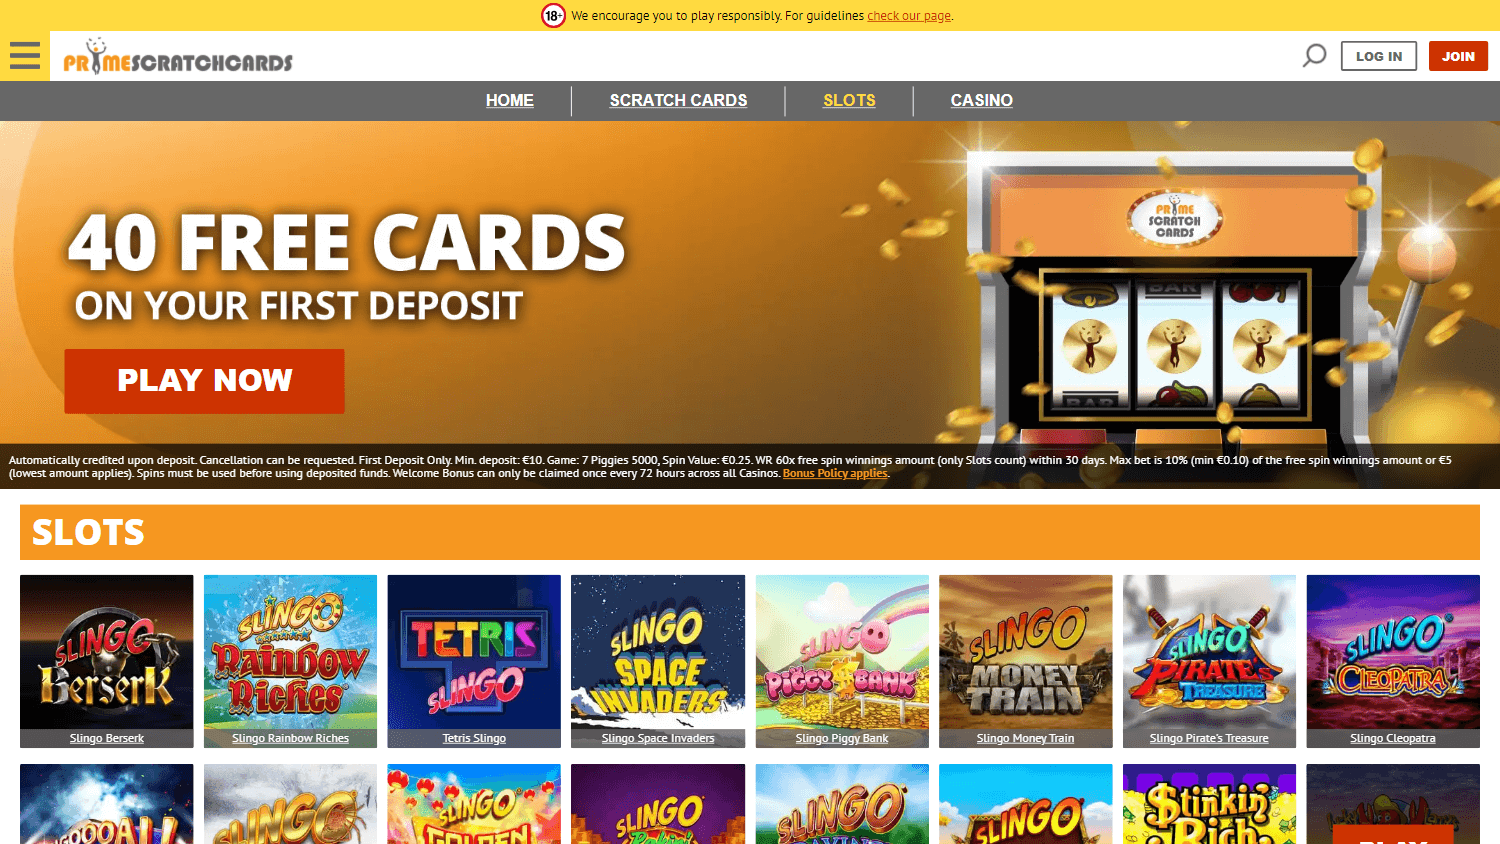 primescratchcards_casino_game_gallery_desktop